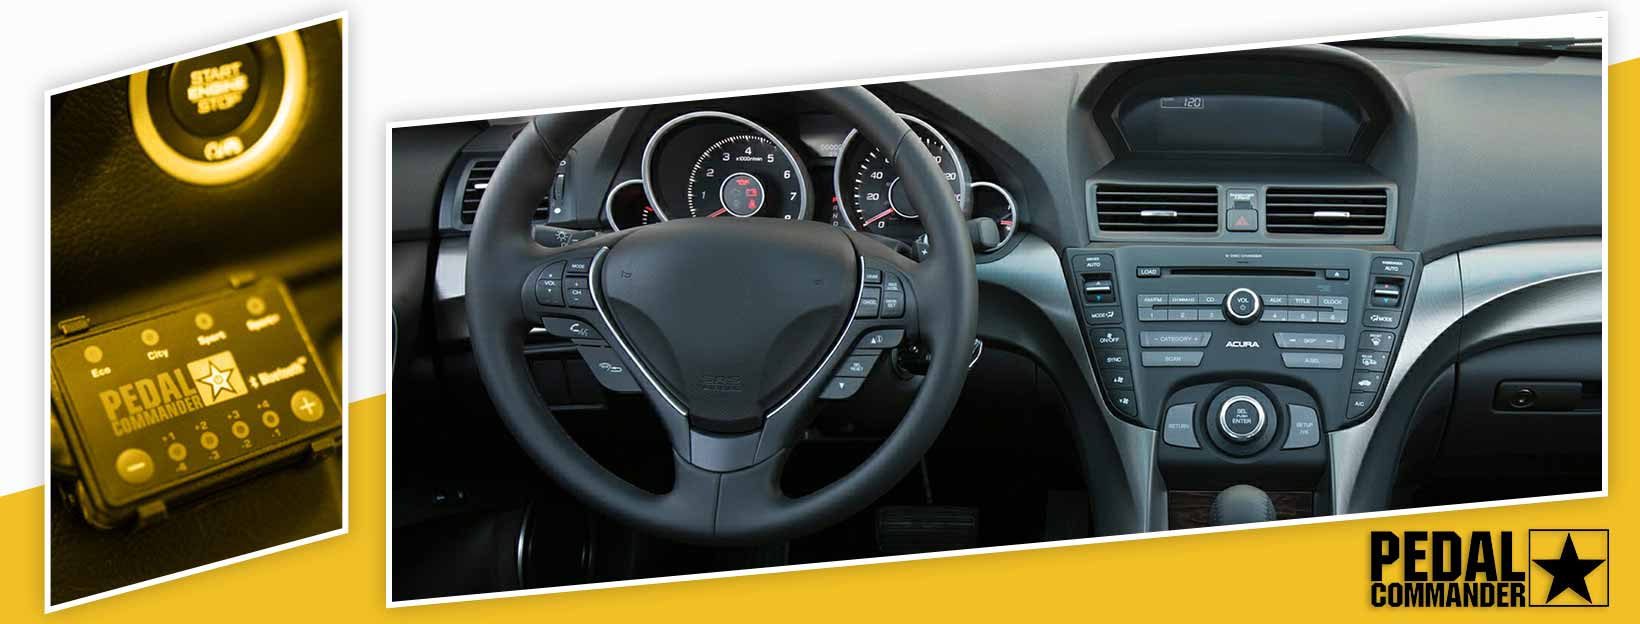 Pedal Commander for Acura TL - interior